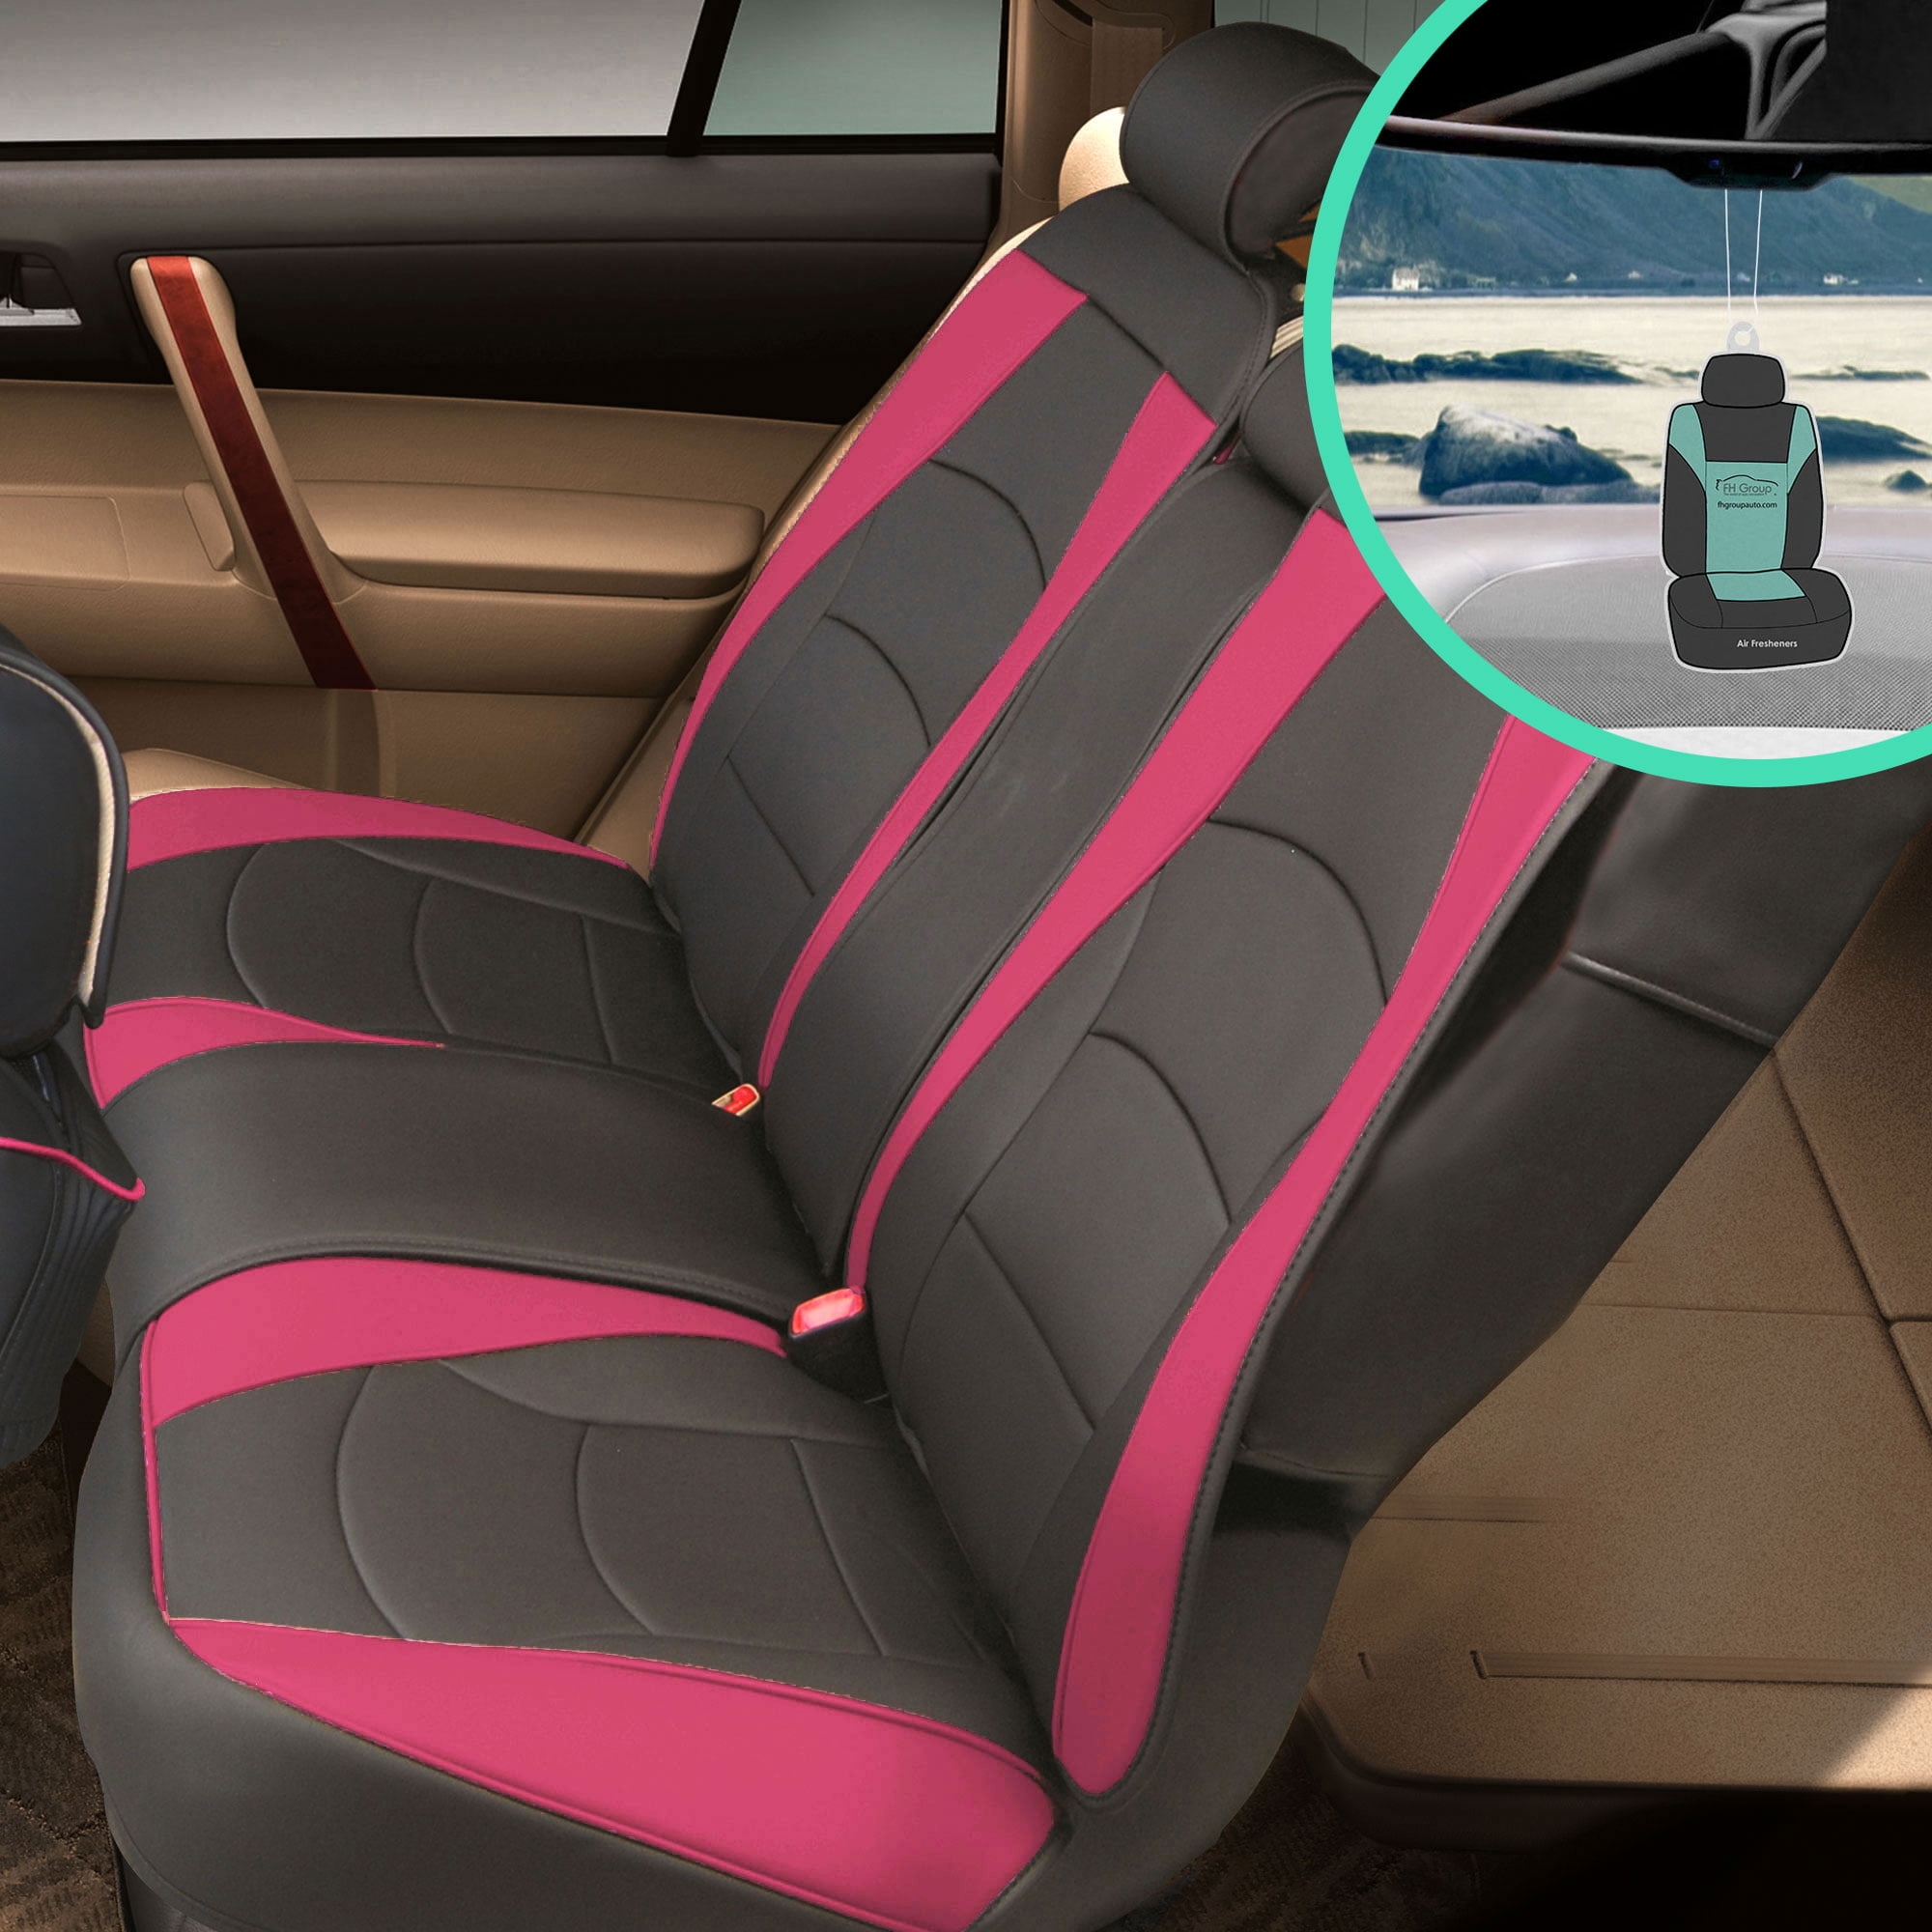 FH Group Ergonomic Cooling Gel Car Seat Cushion with Bonus Air Freshener, Green